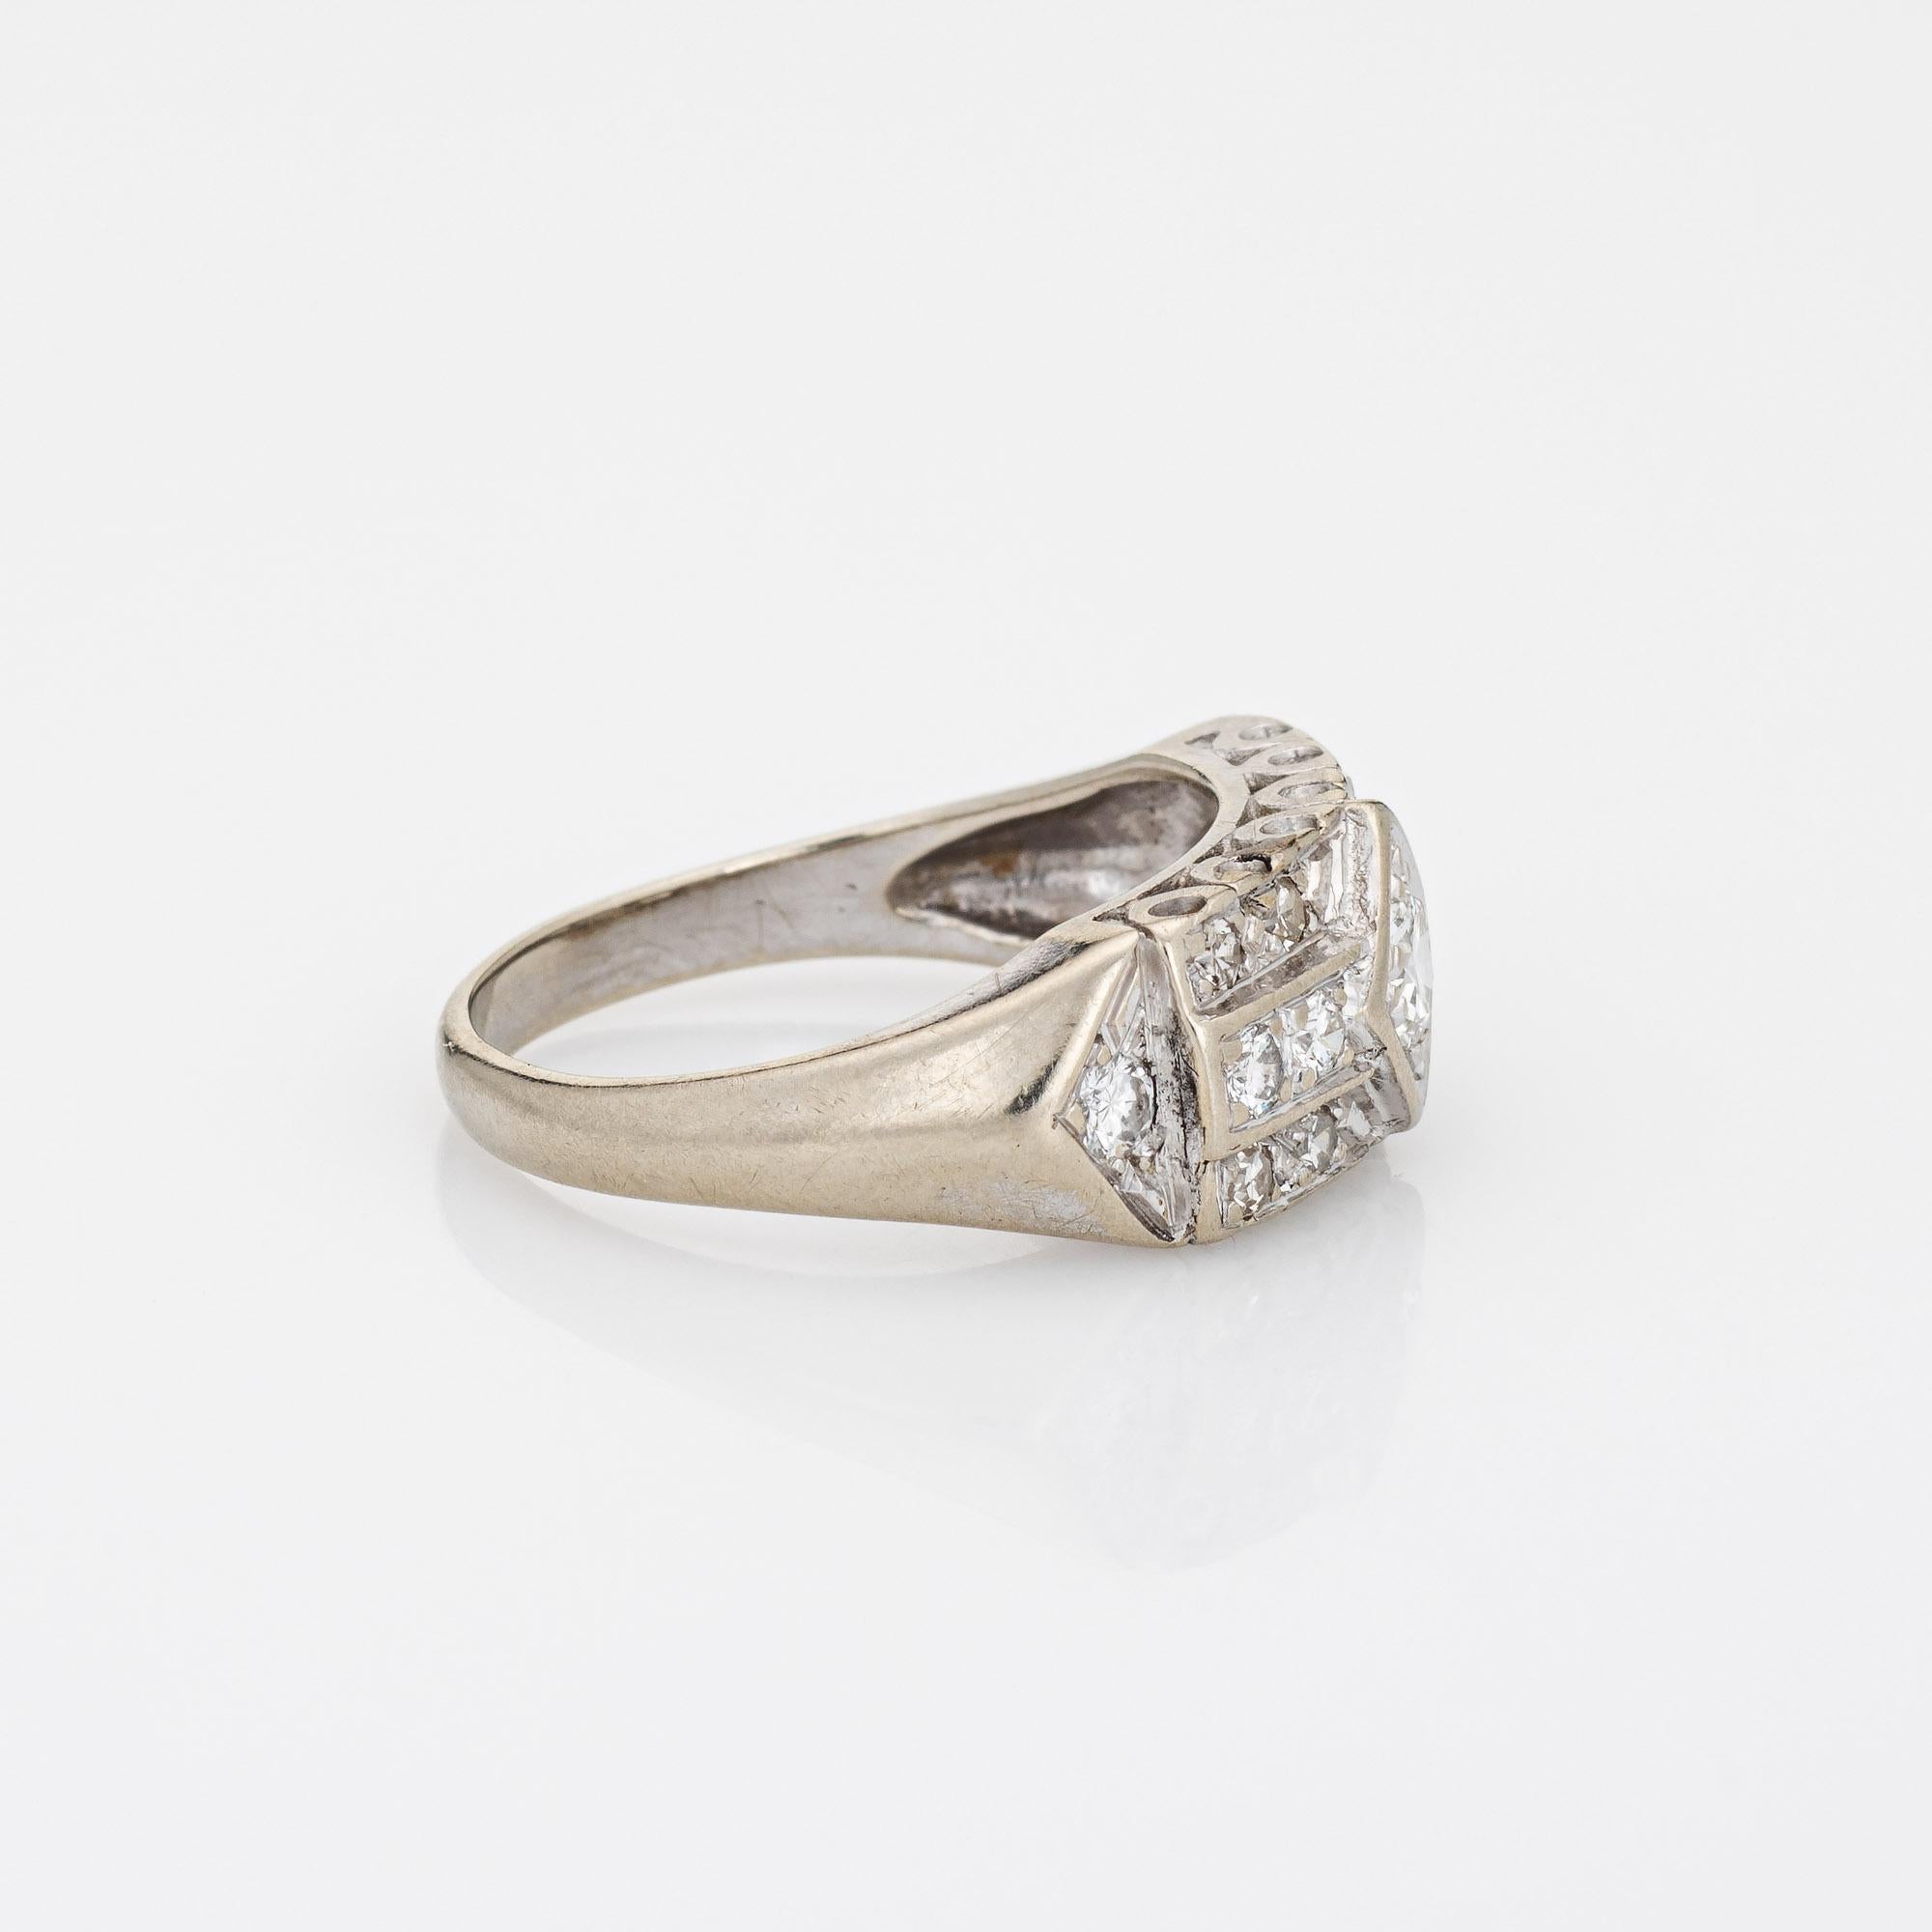 Old European Cut Vintage Art Deco Diamond Ring 14k White Gold Band Estate Fine Jewelry Sz 5.75